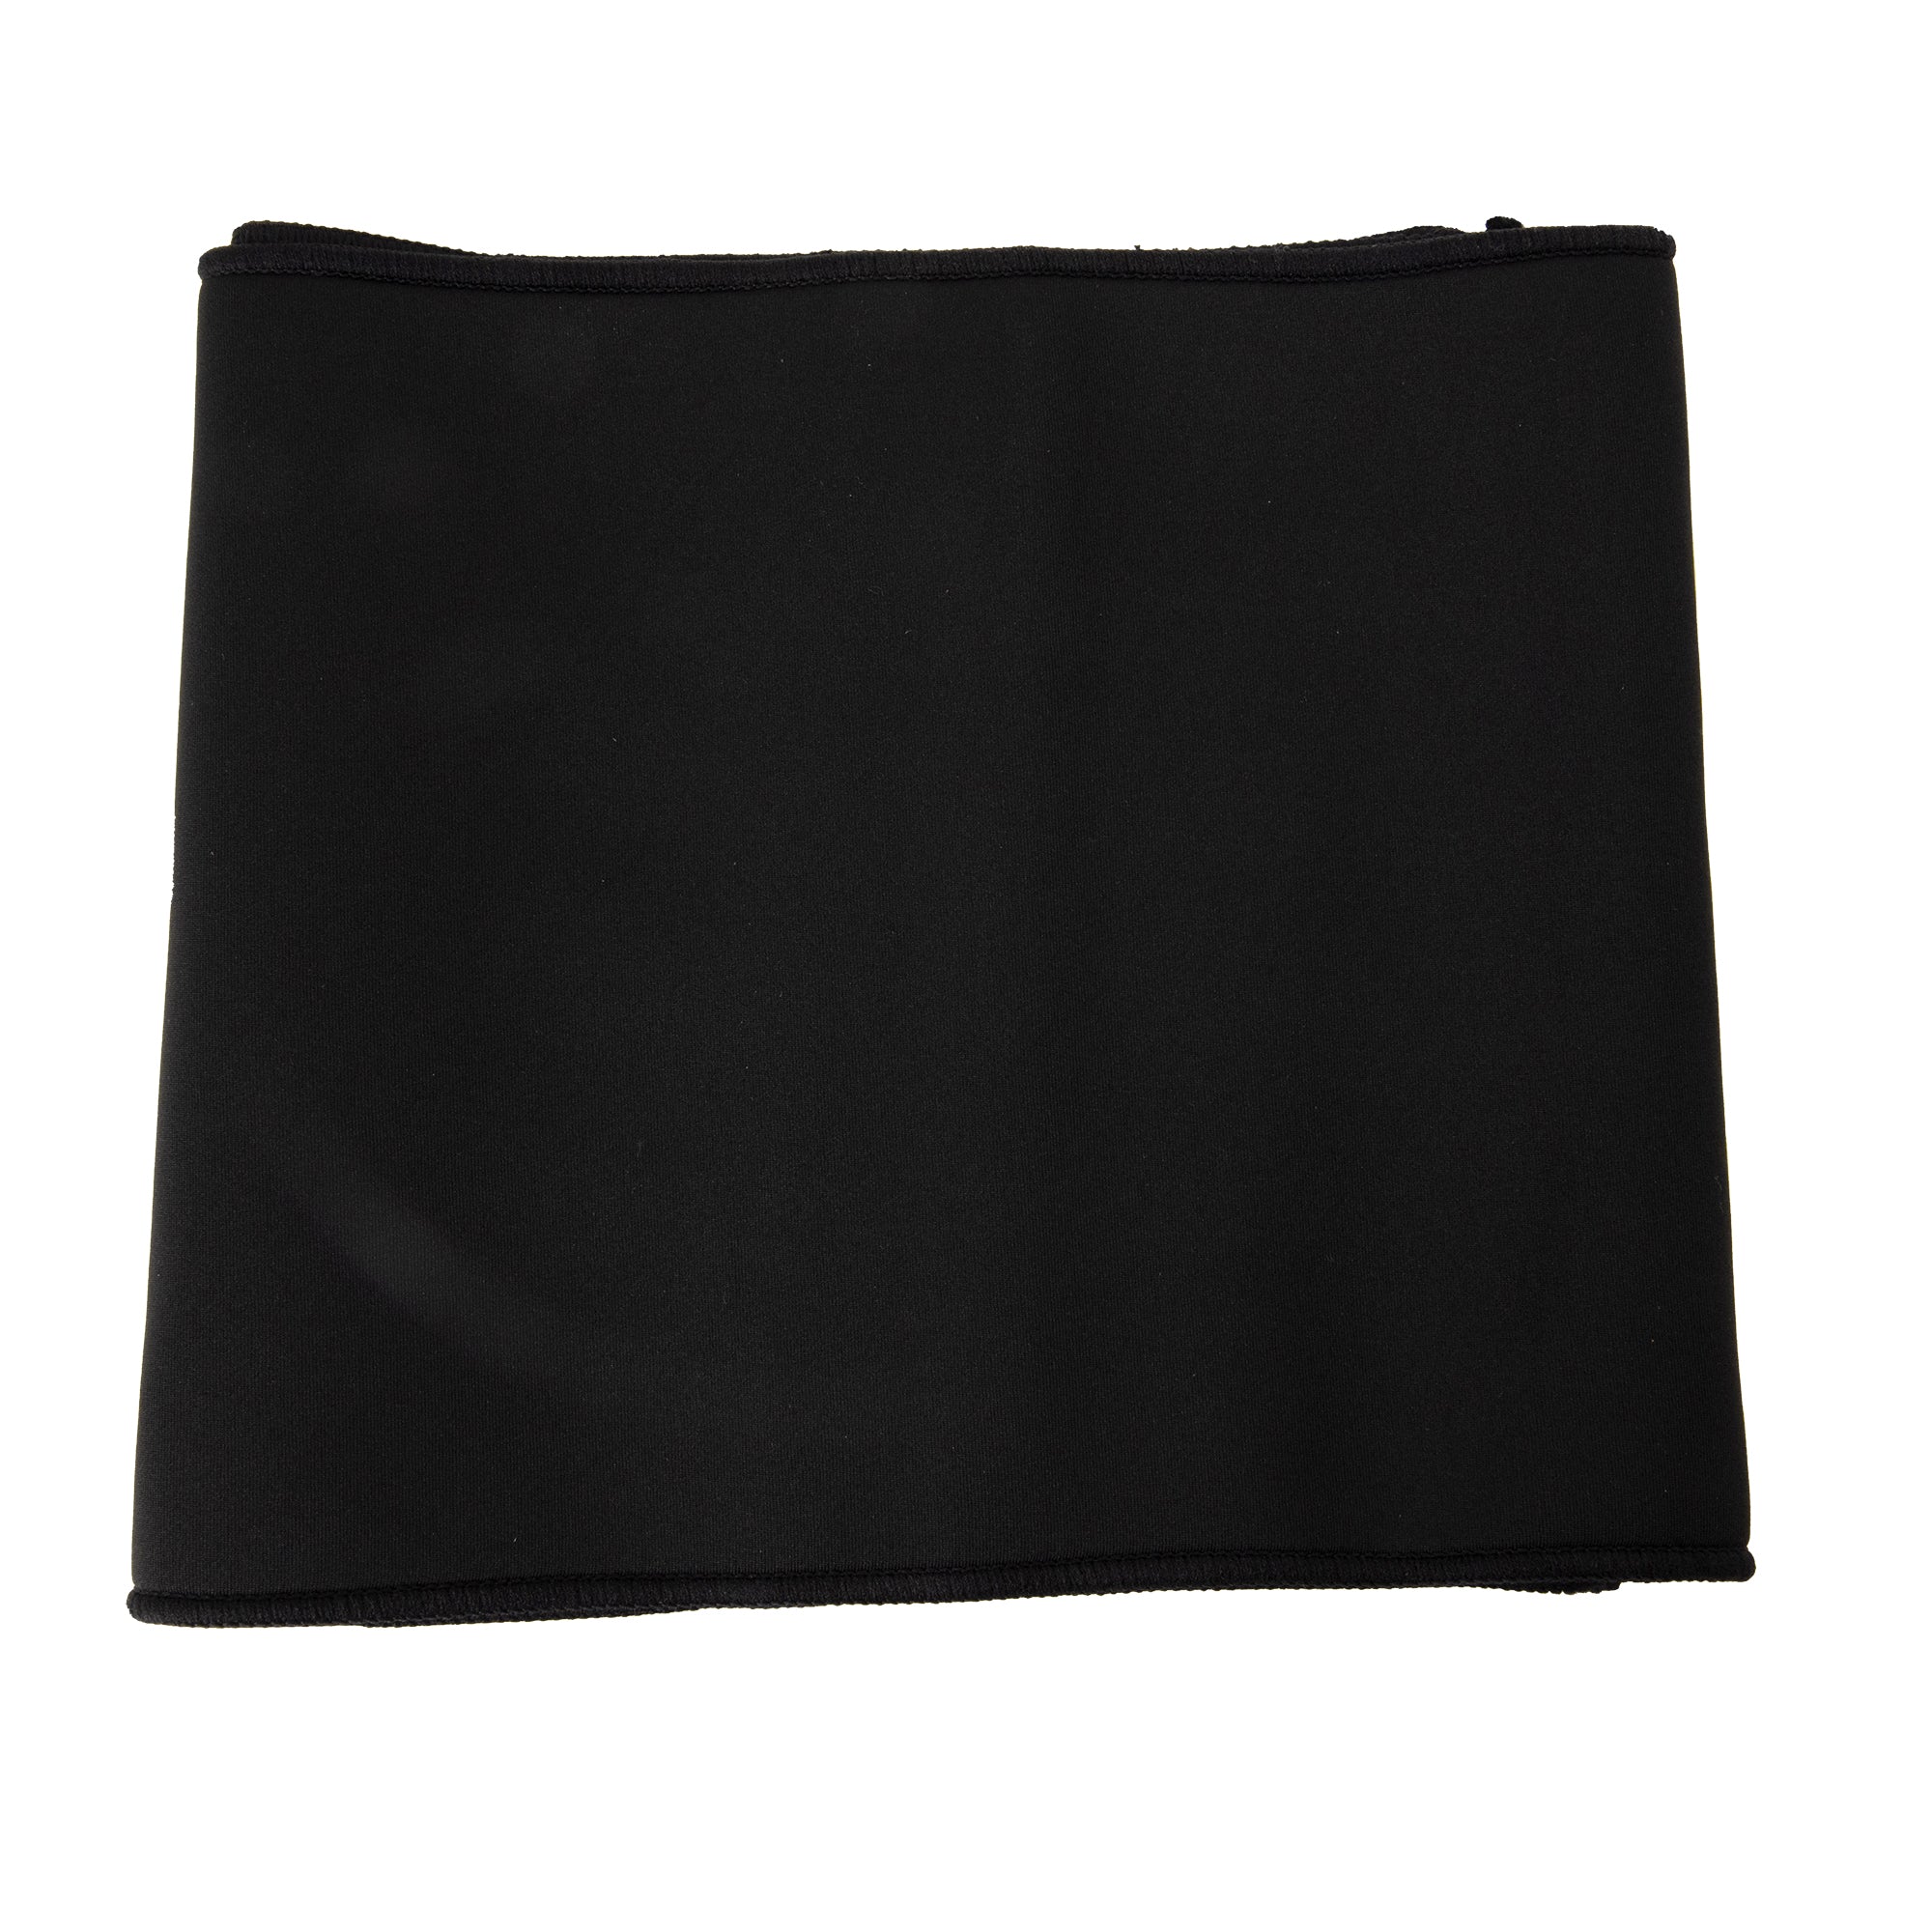 Zippered Waist Trimmer Belt – Black – GoZone – GoZone Canada